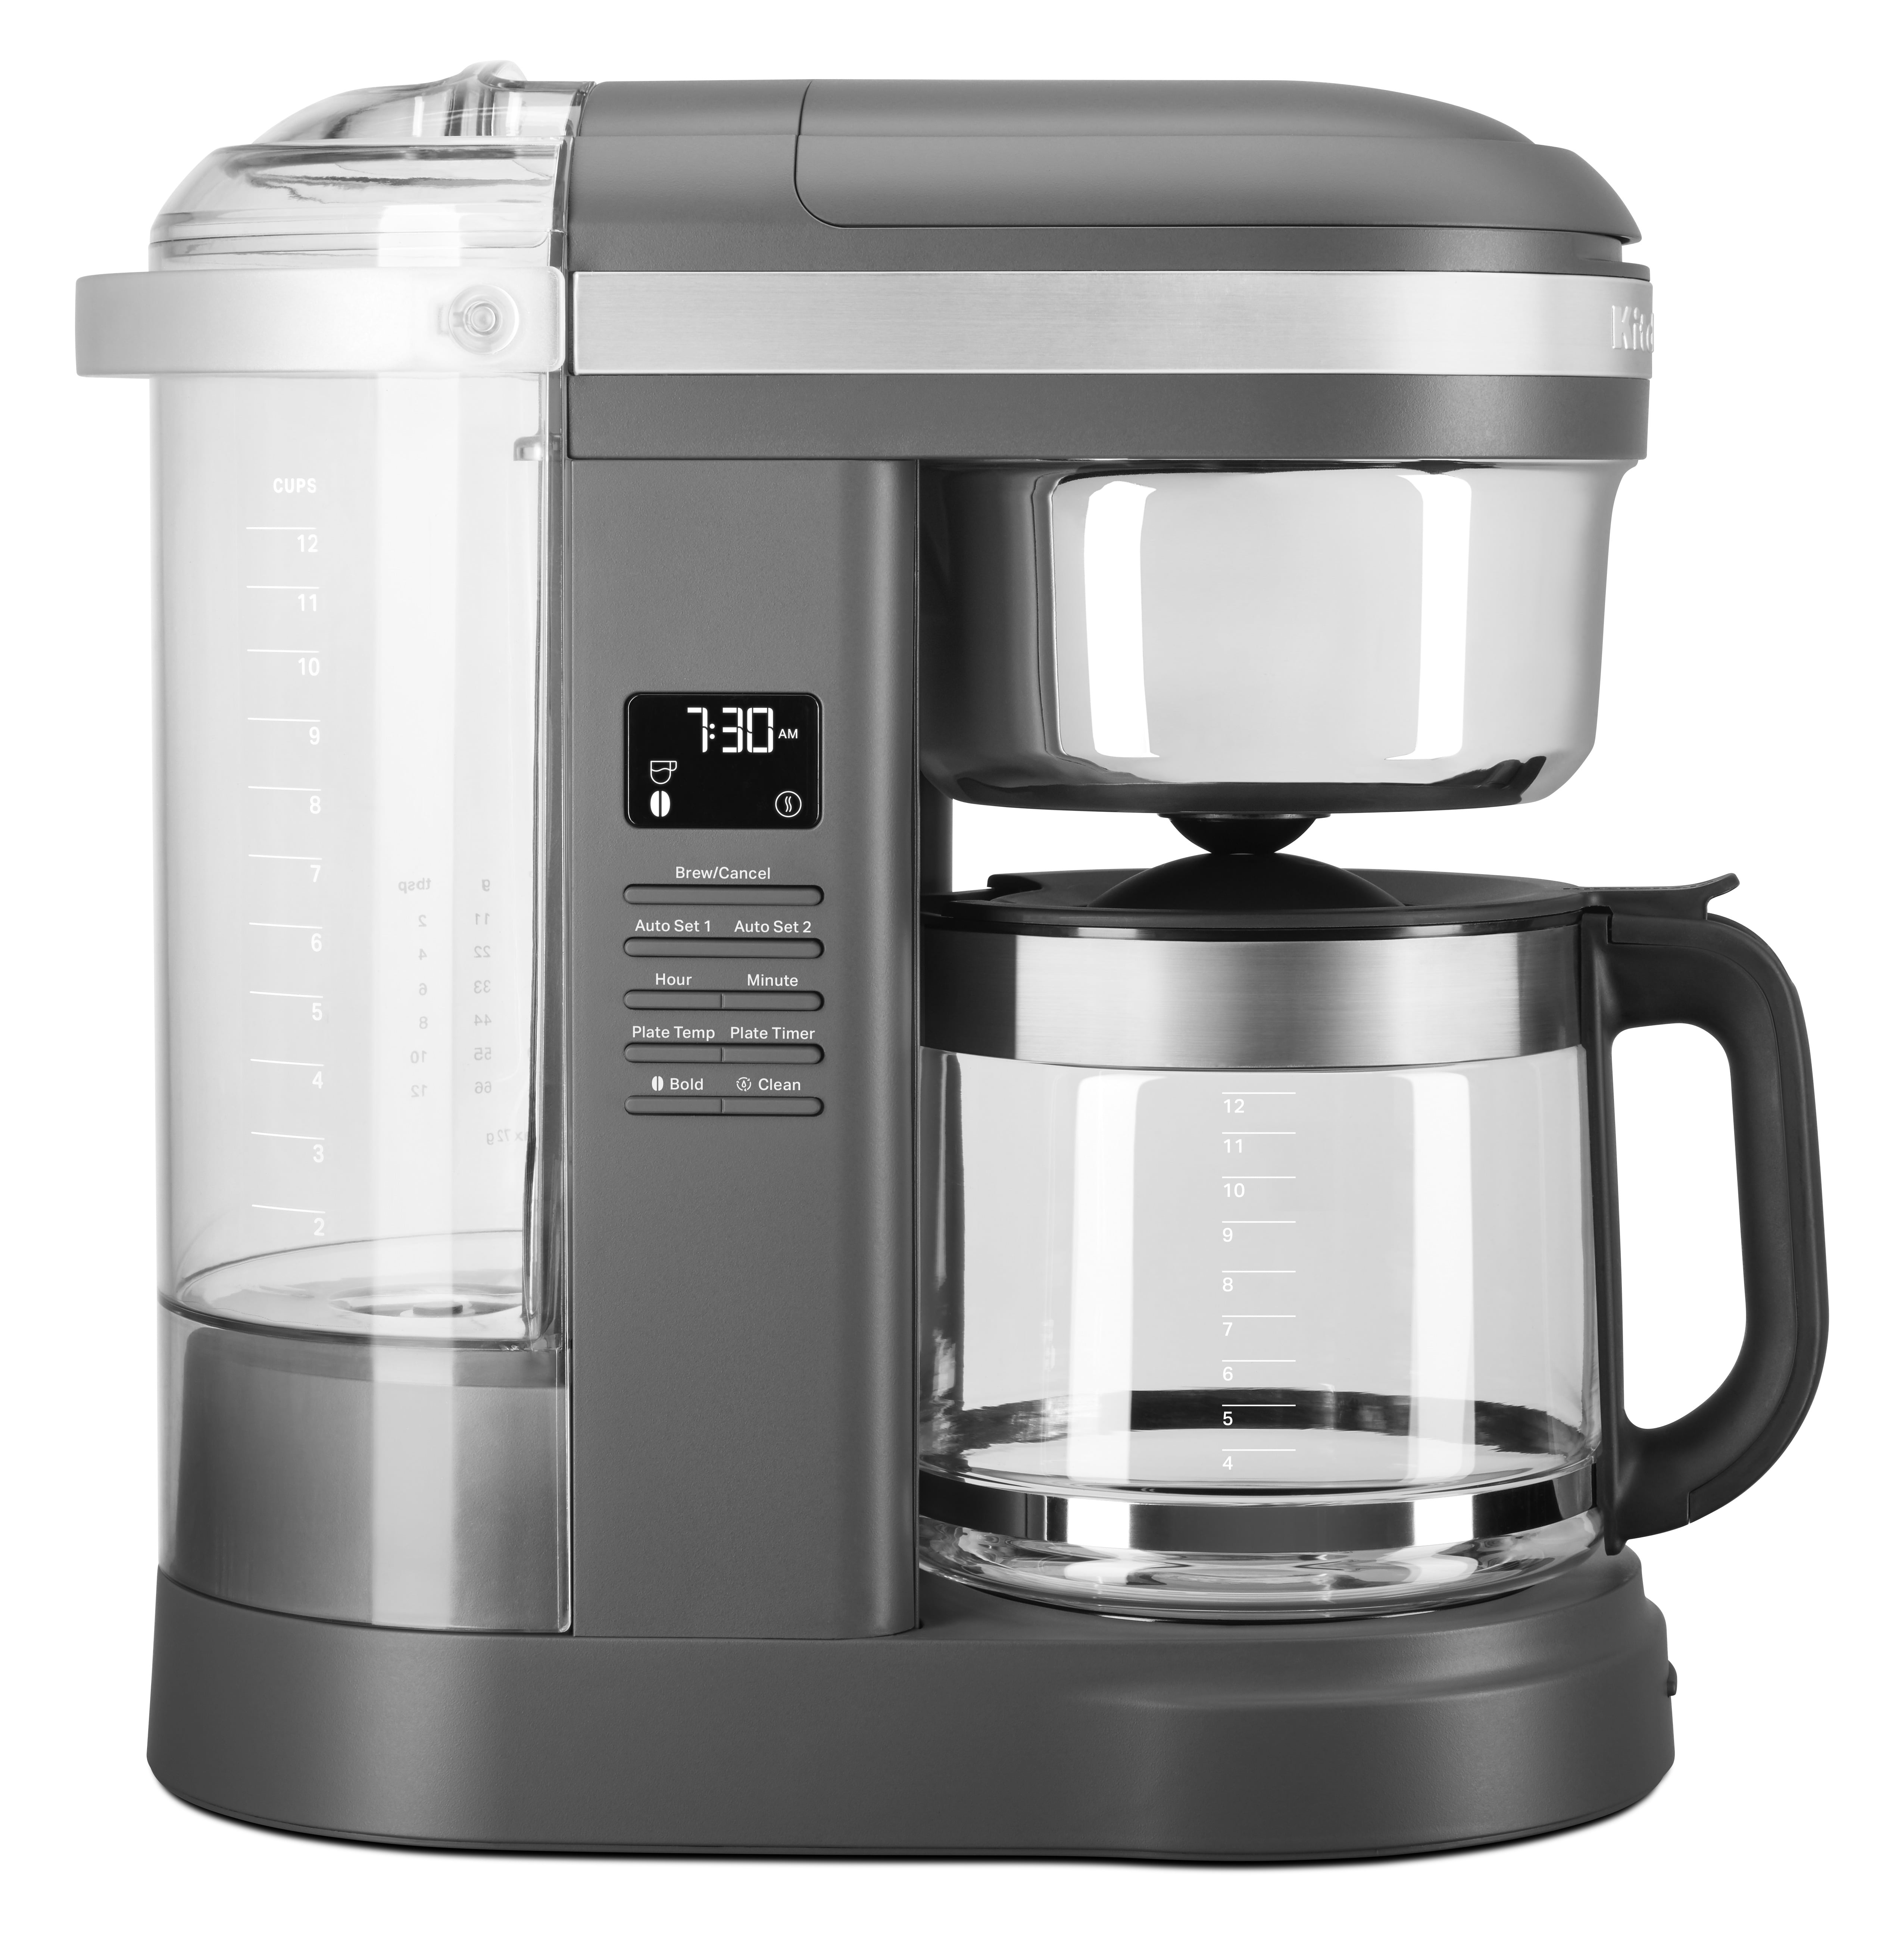 Filter coffee machine - KCM1203CU - KitchenAid - automatic